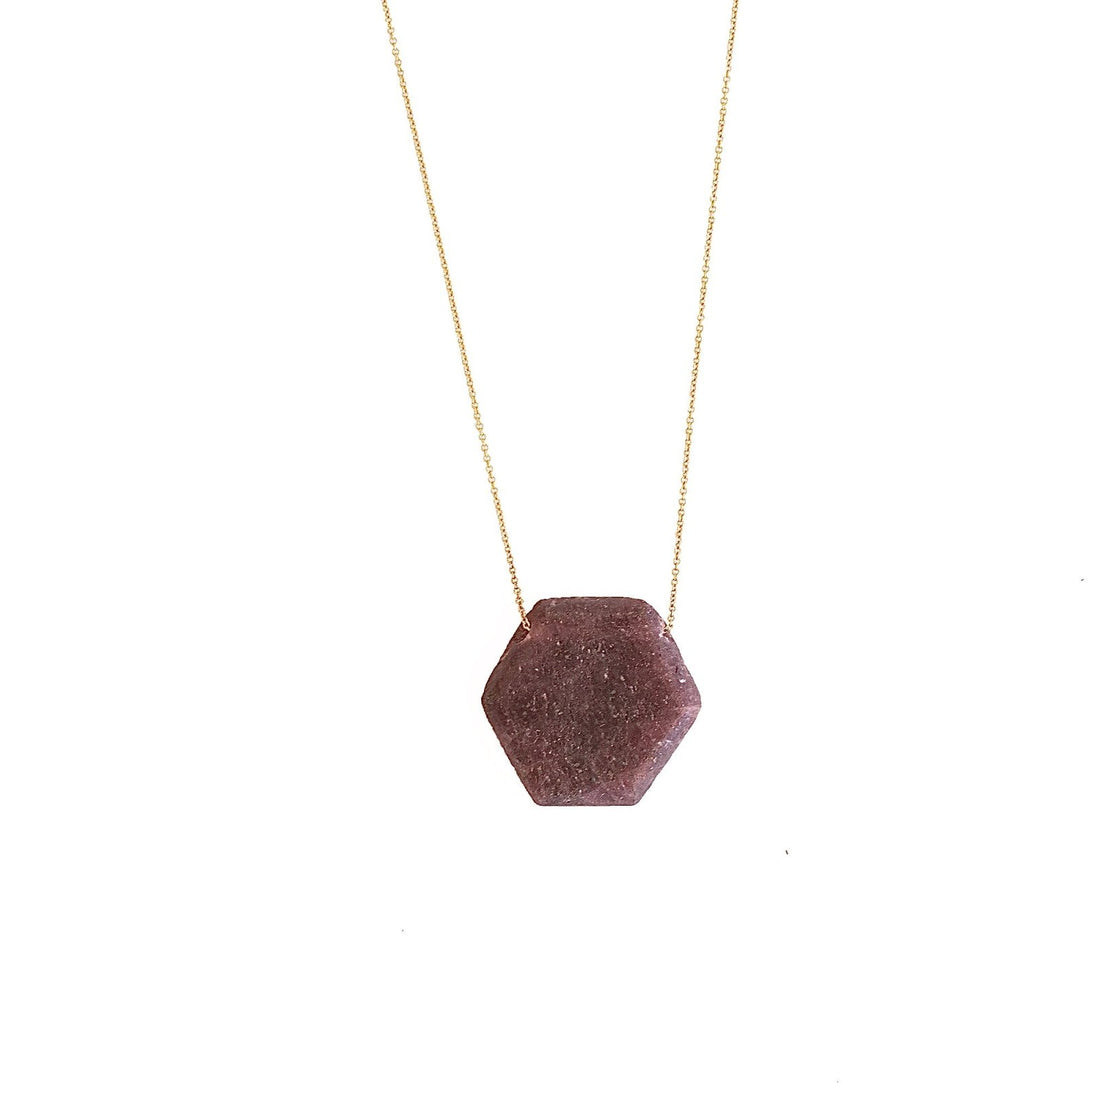 One of a Kind Ruby Necklace - Ele Keats Jewelry